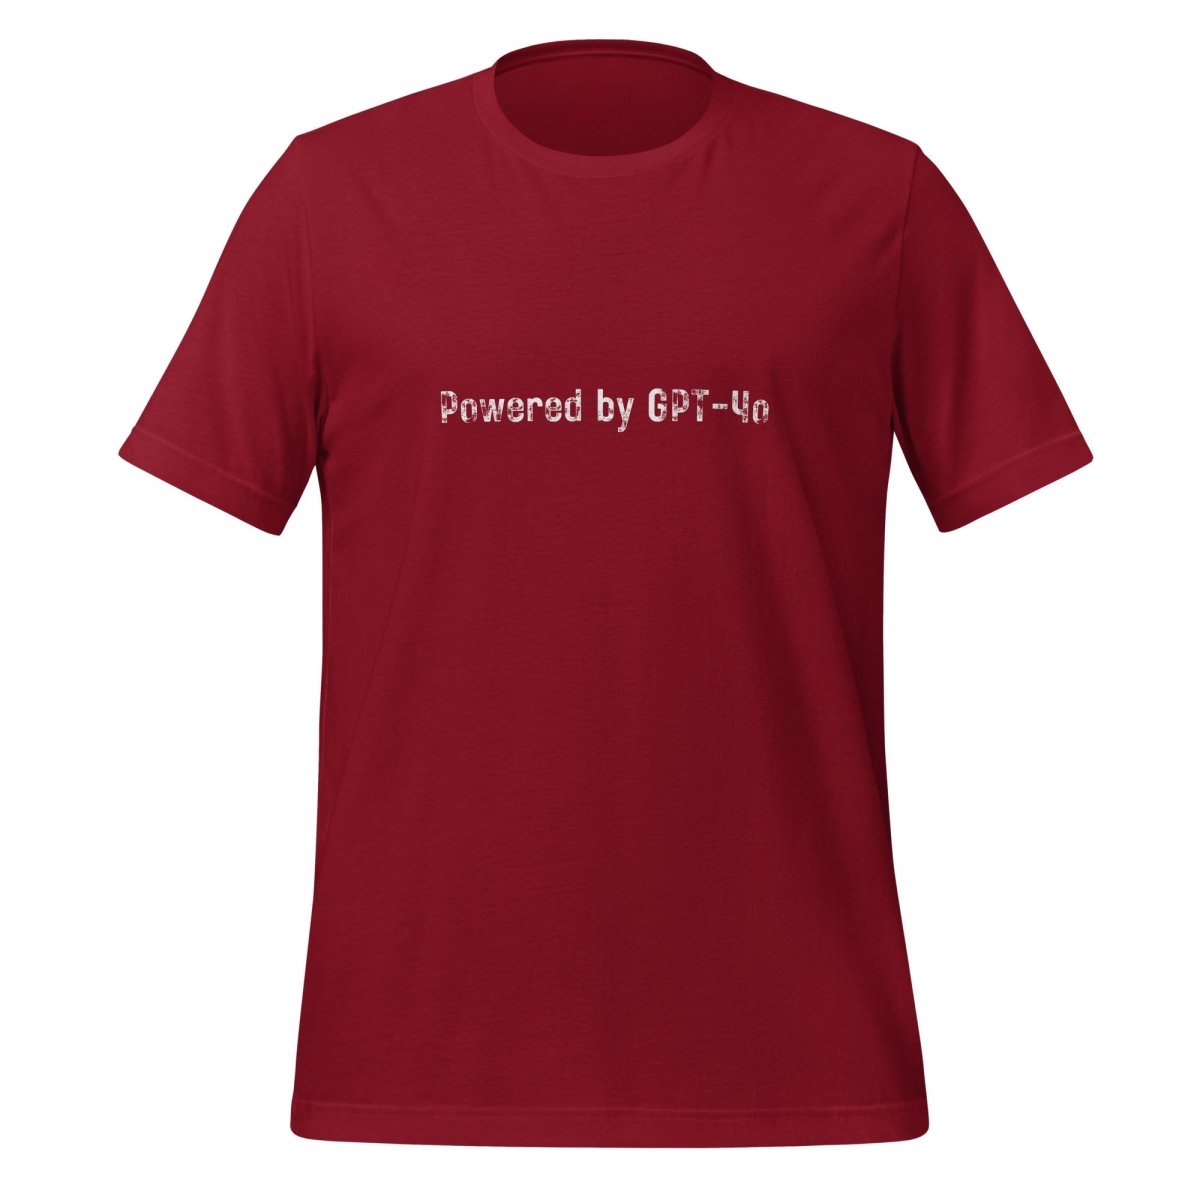 Powered by GPT - 4o T - Shirt 2 (unisex) - Cardinal - AI Store